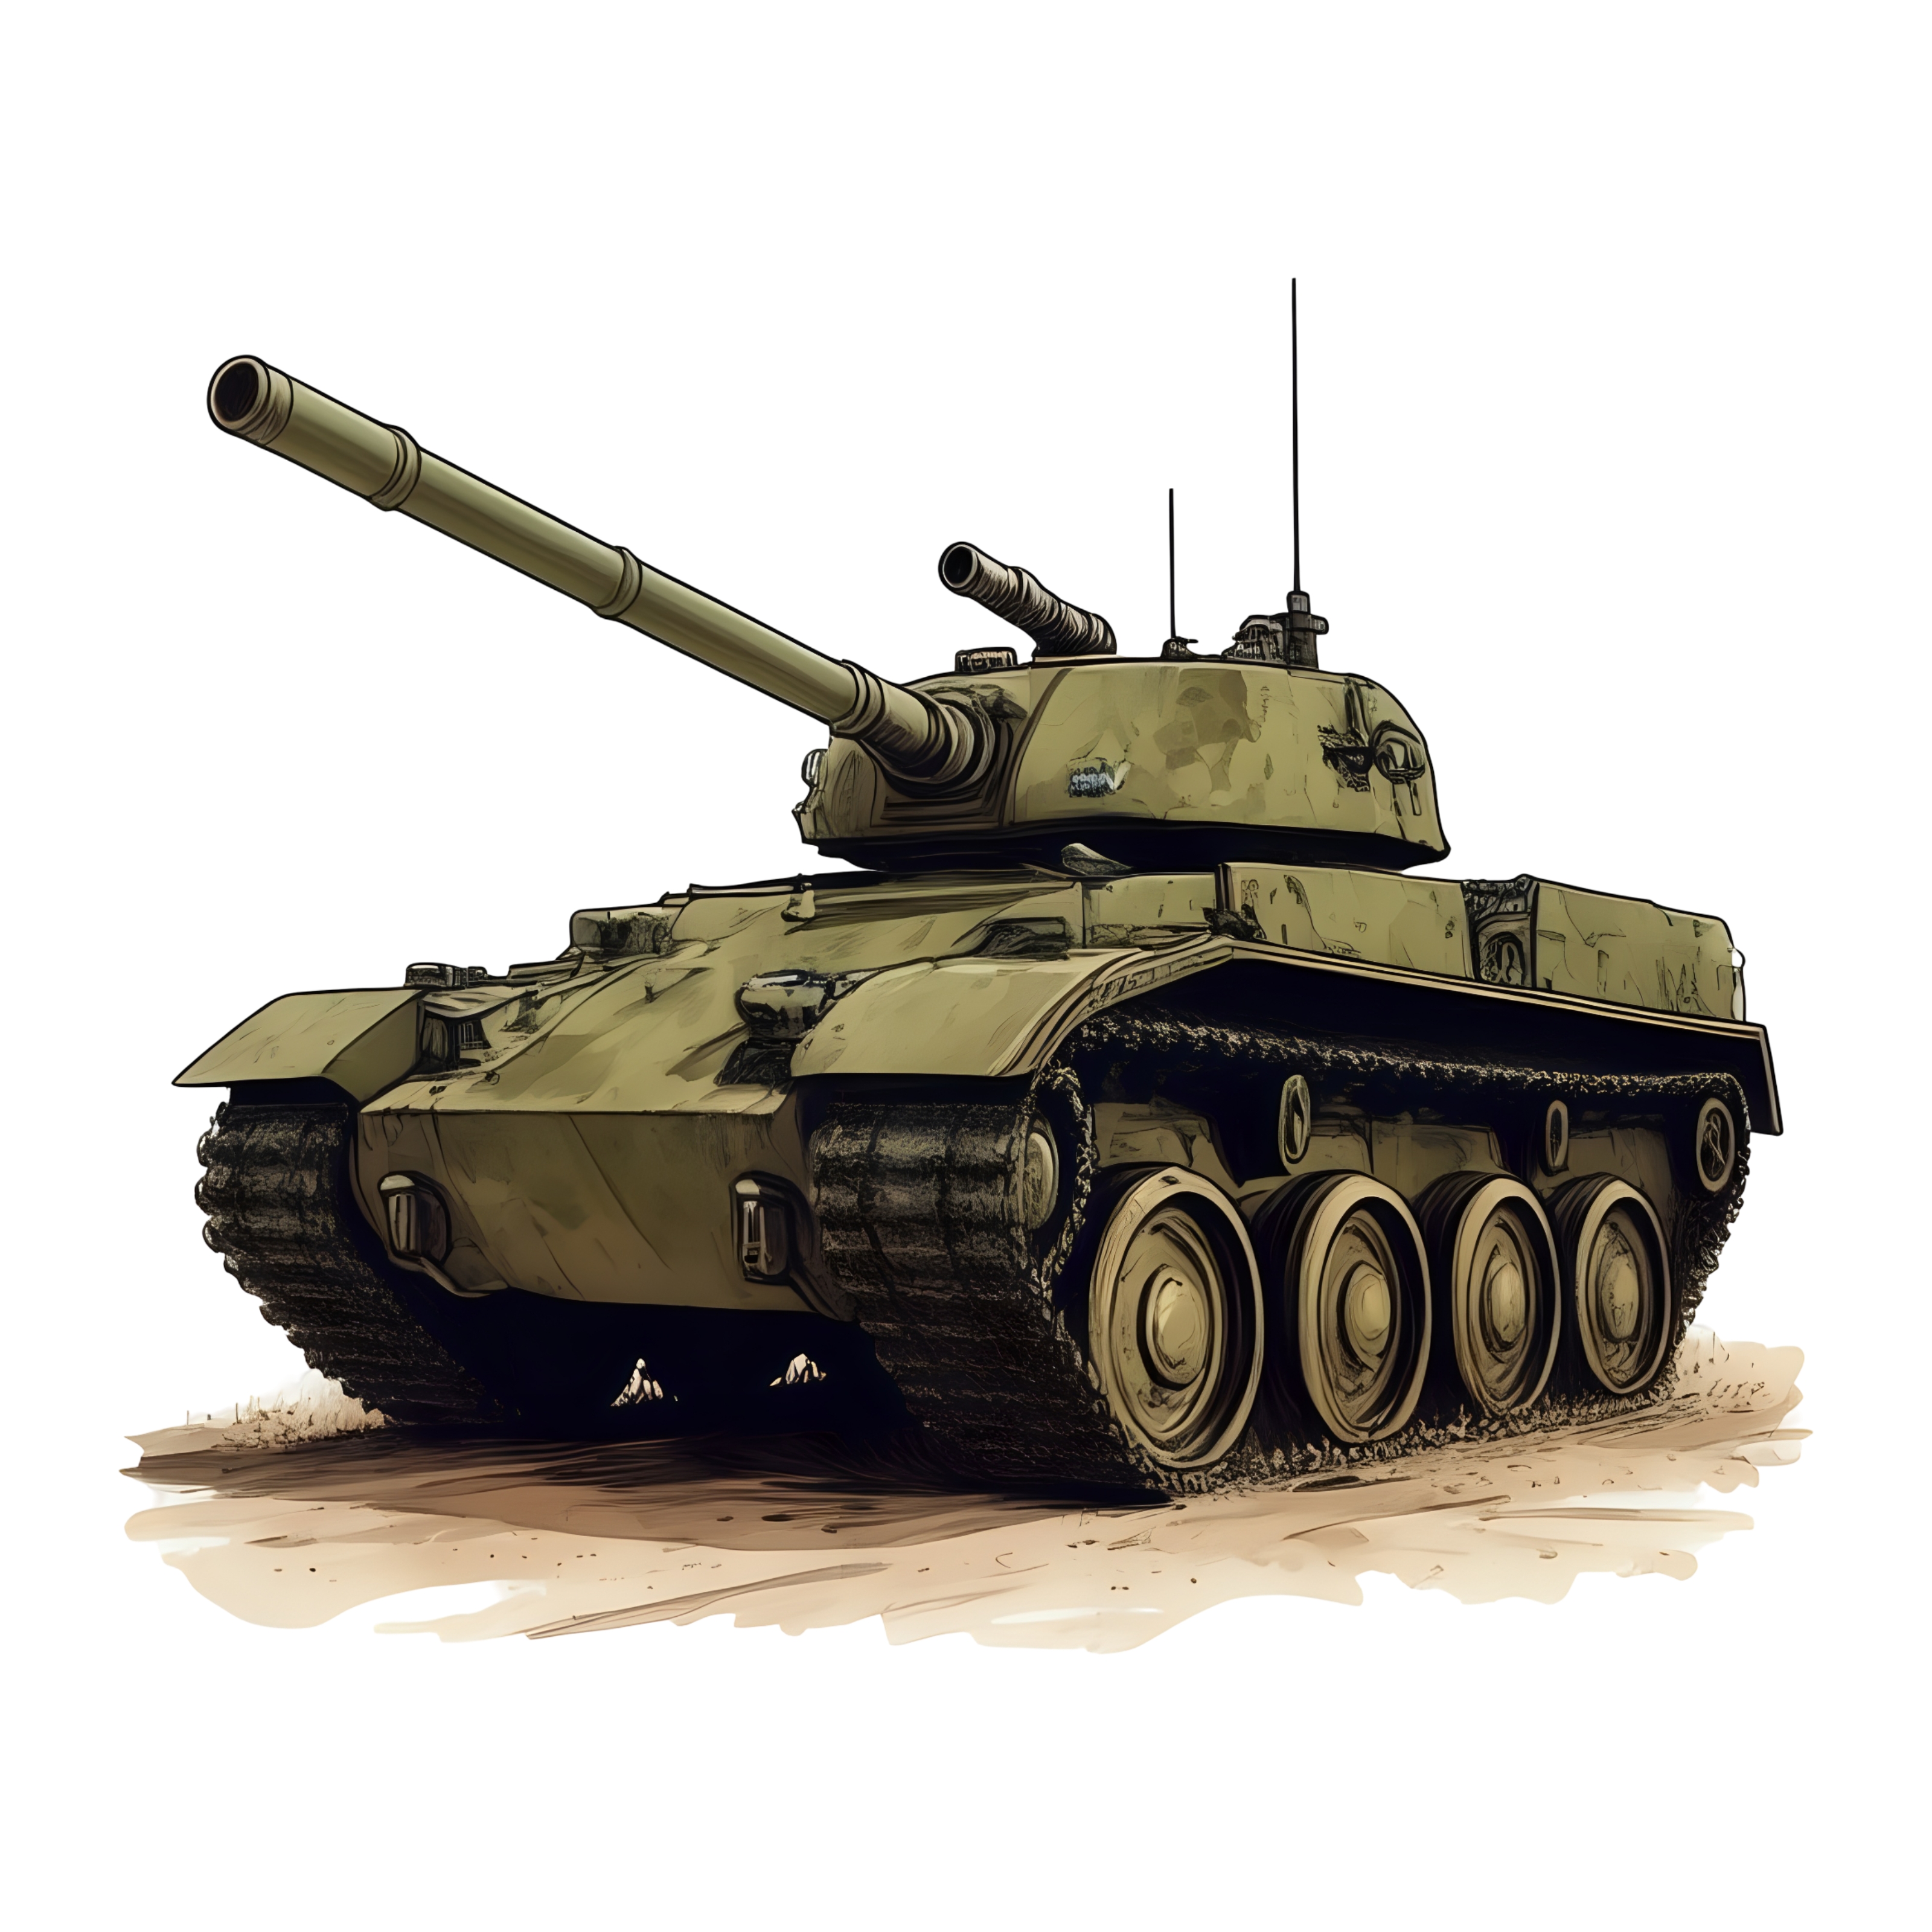 War tank graphic design